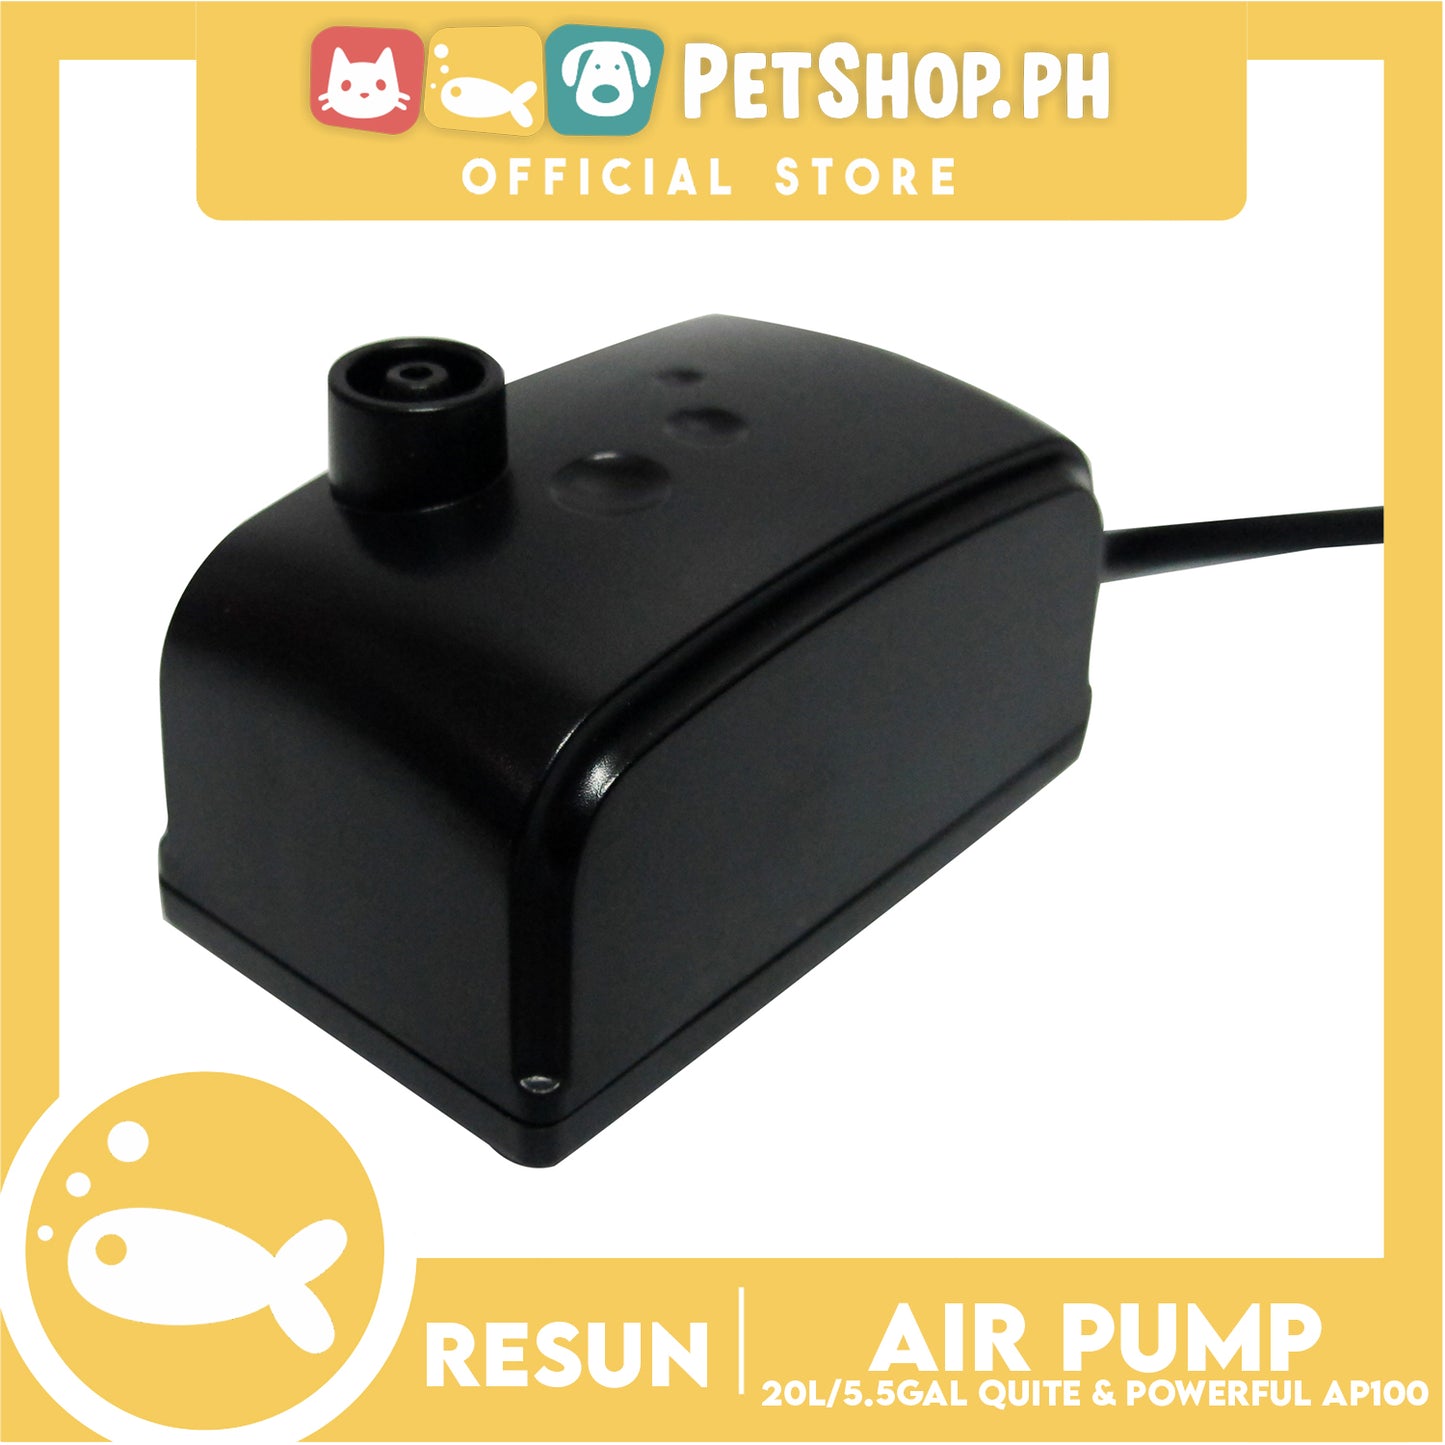 Resun Aquarium Air Pump AP-100 with Accessories Up to 20Liters